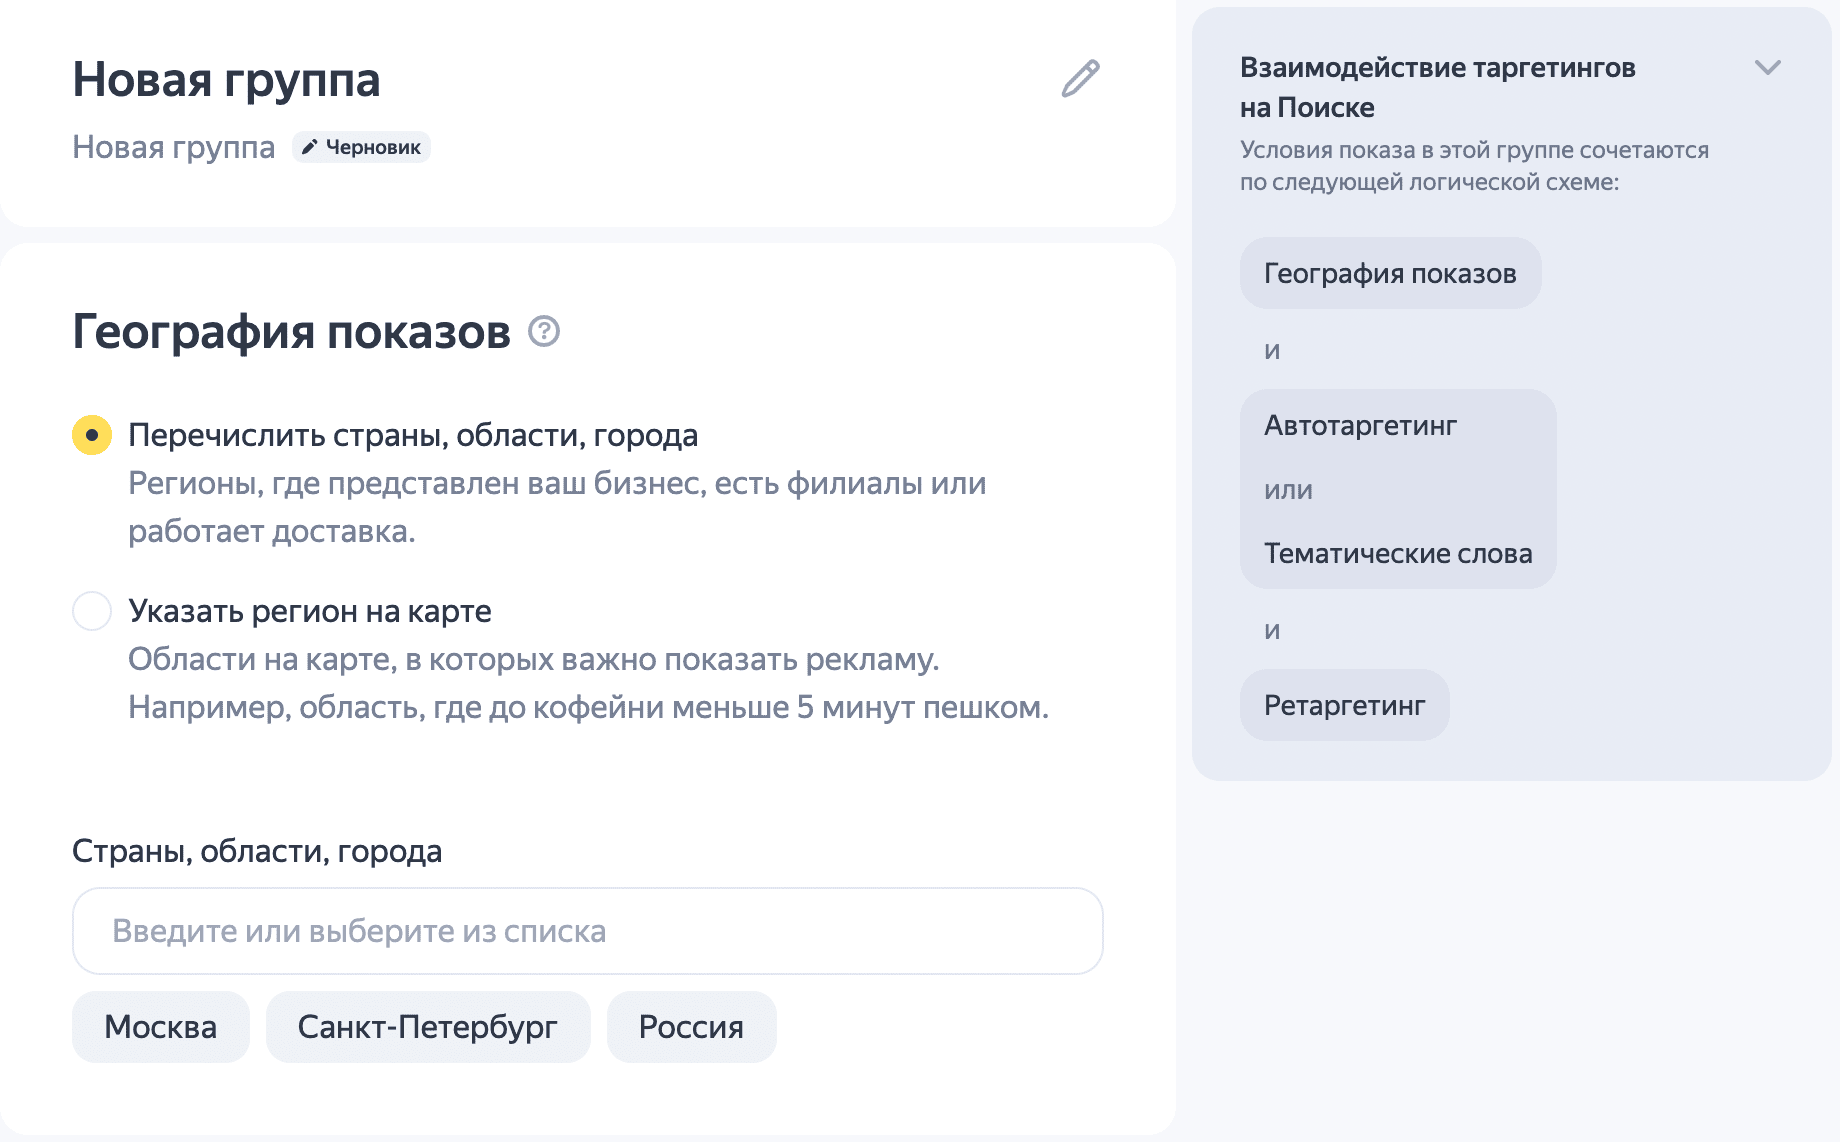 Настройка групп в Яндекс Директе